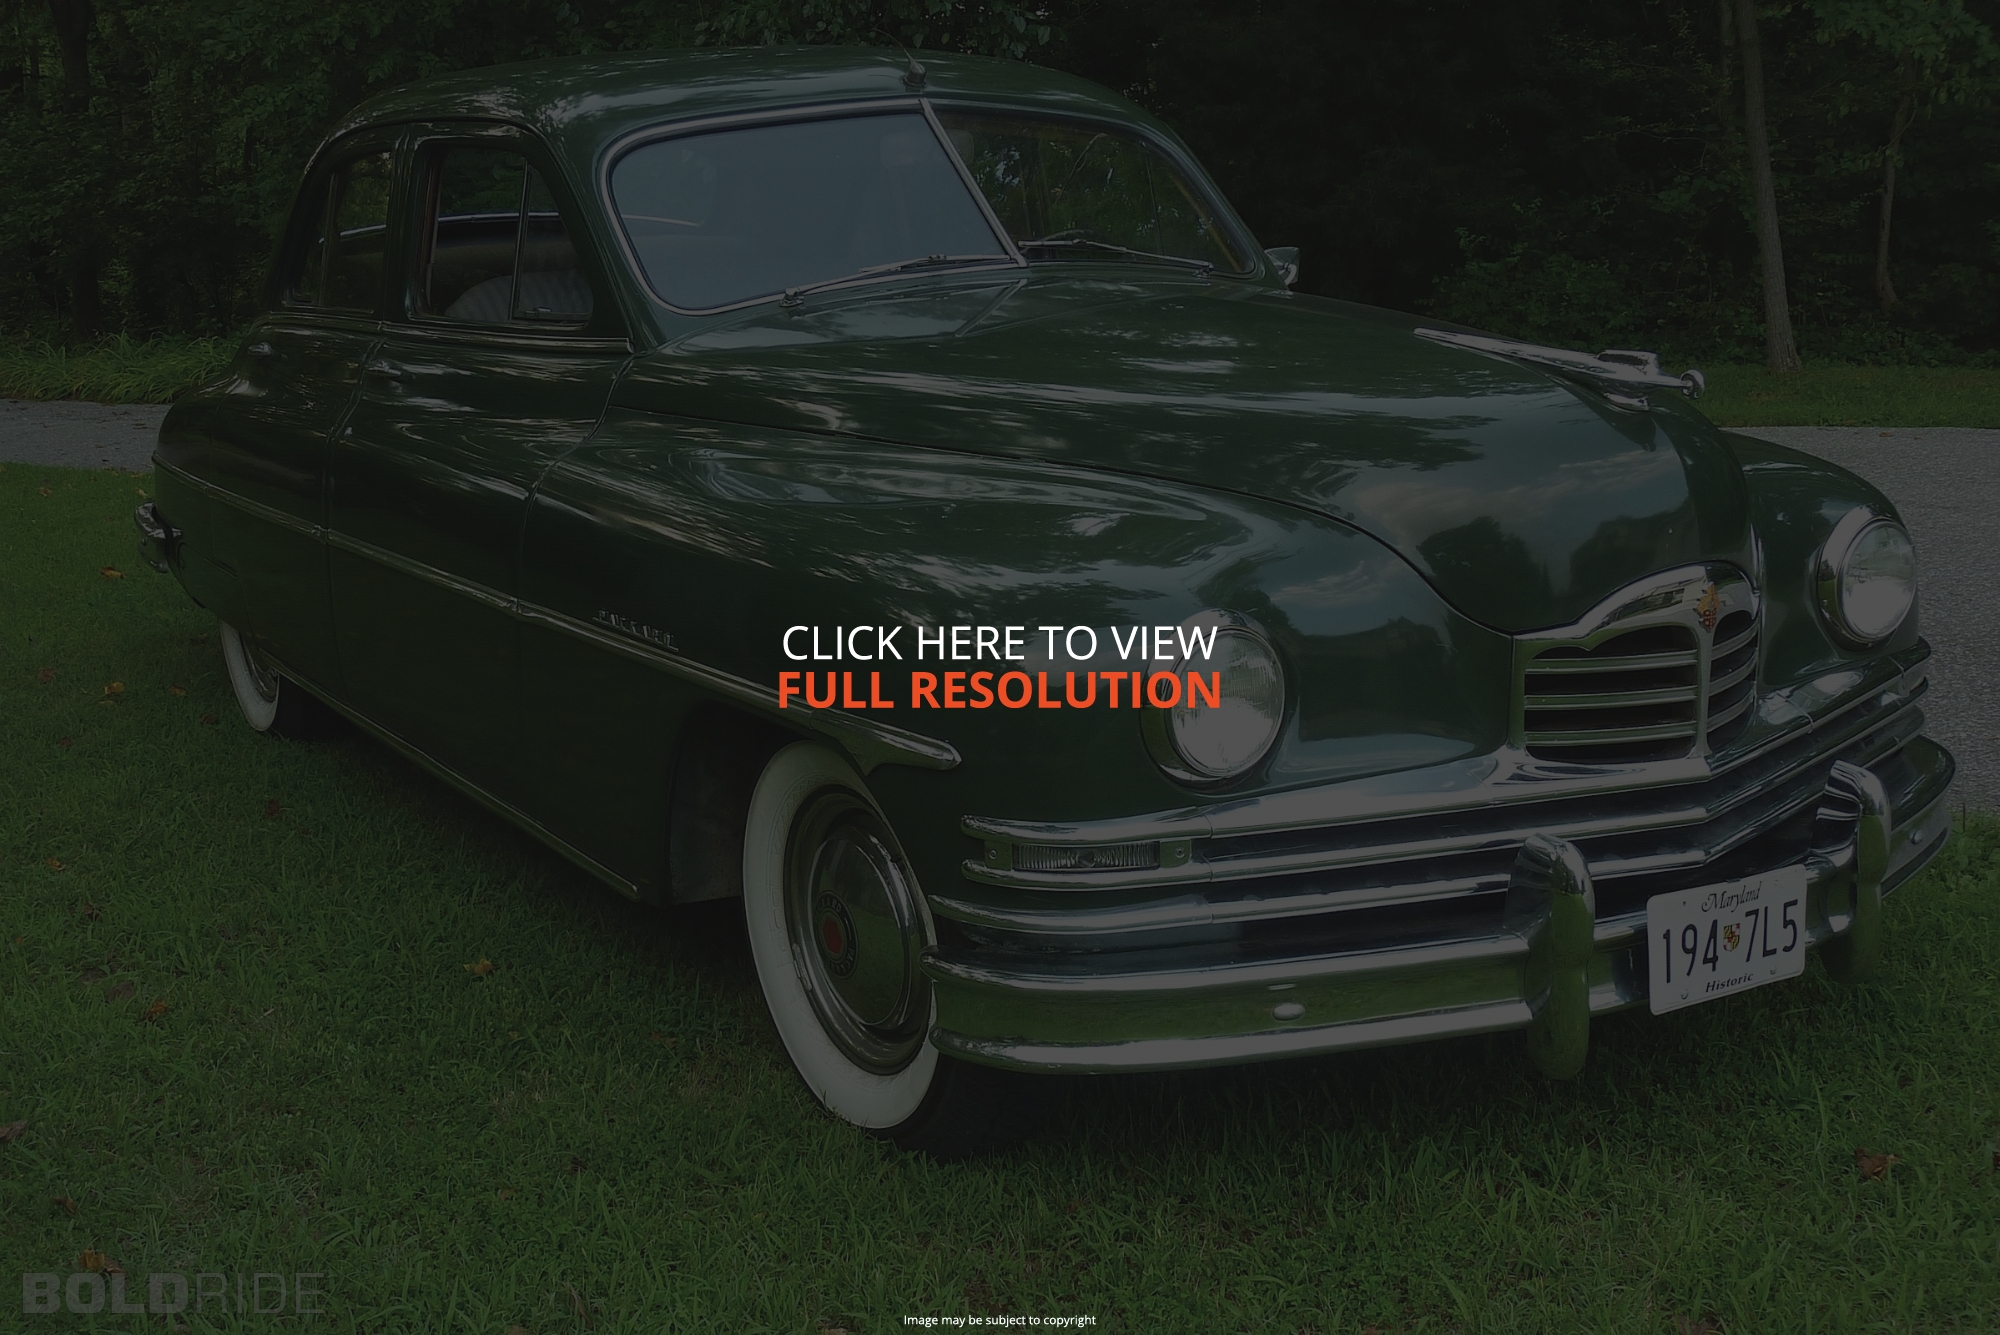 1950 Packard Eight Sedan Boldride.com - Pictures, Wallpapers